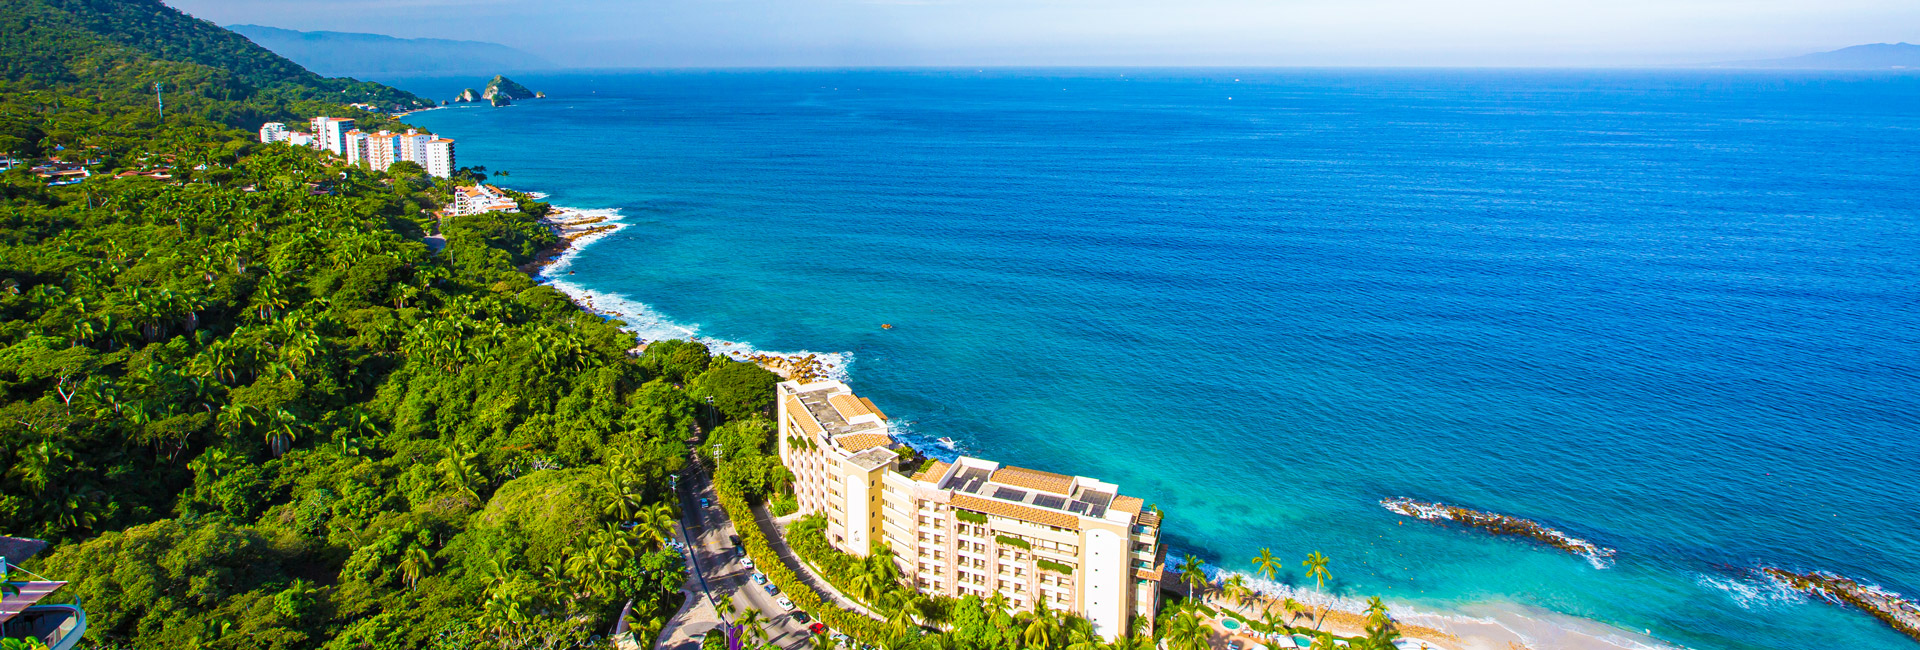 Hotels and Resorts in Puerto Vallarta